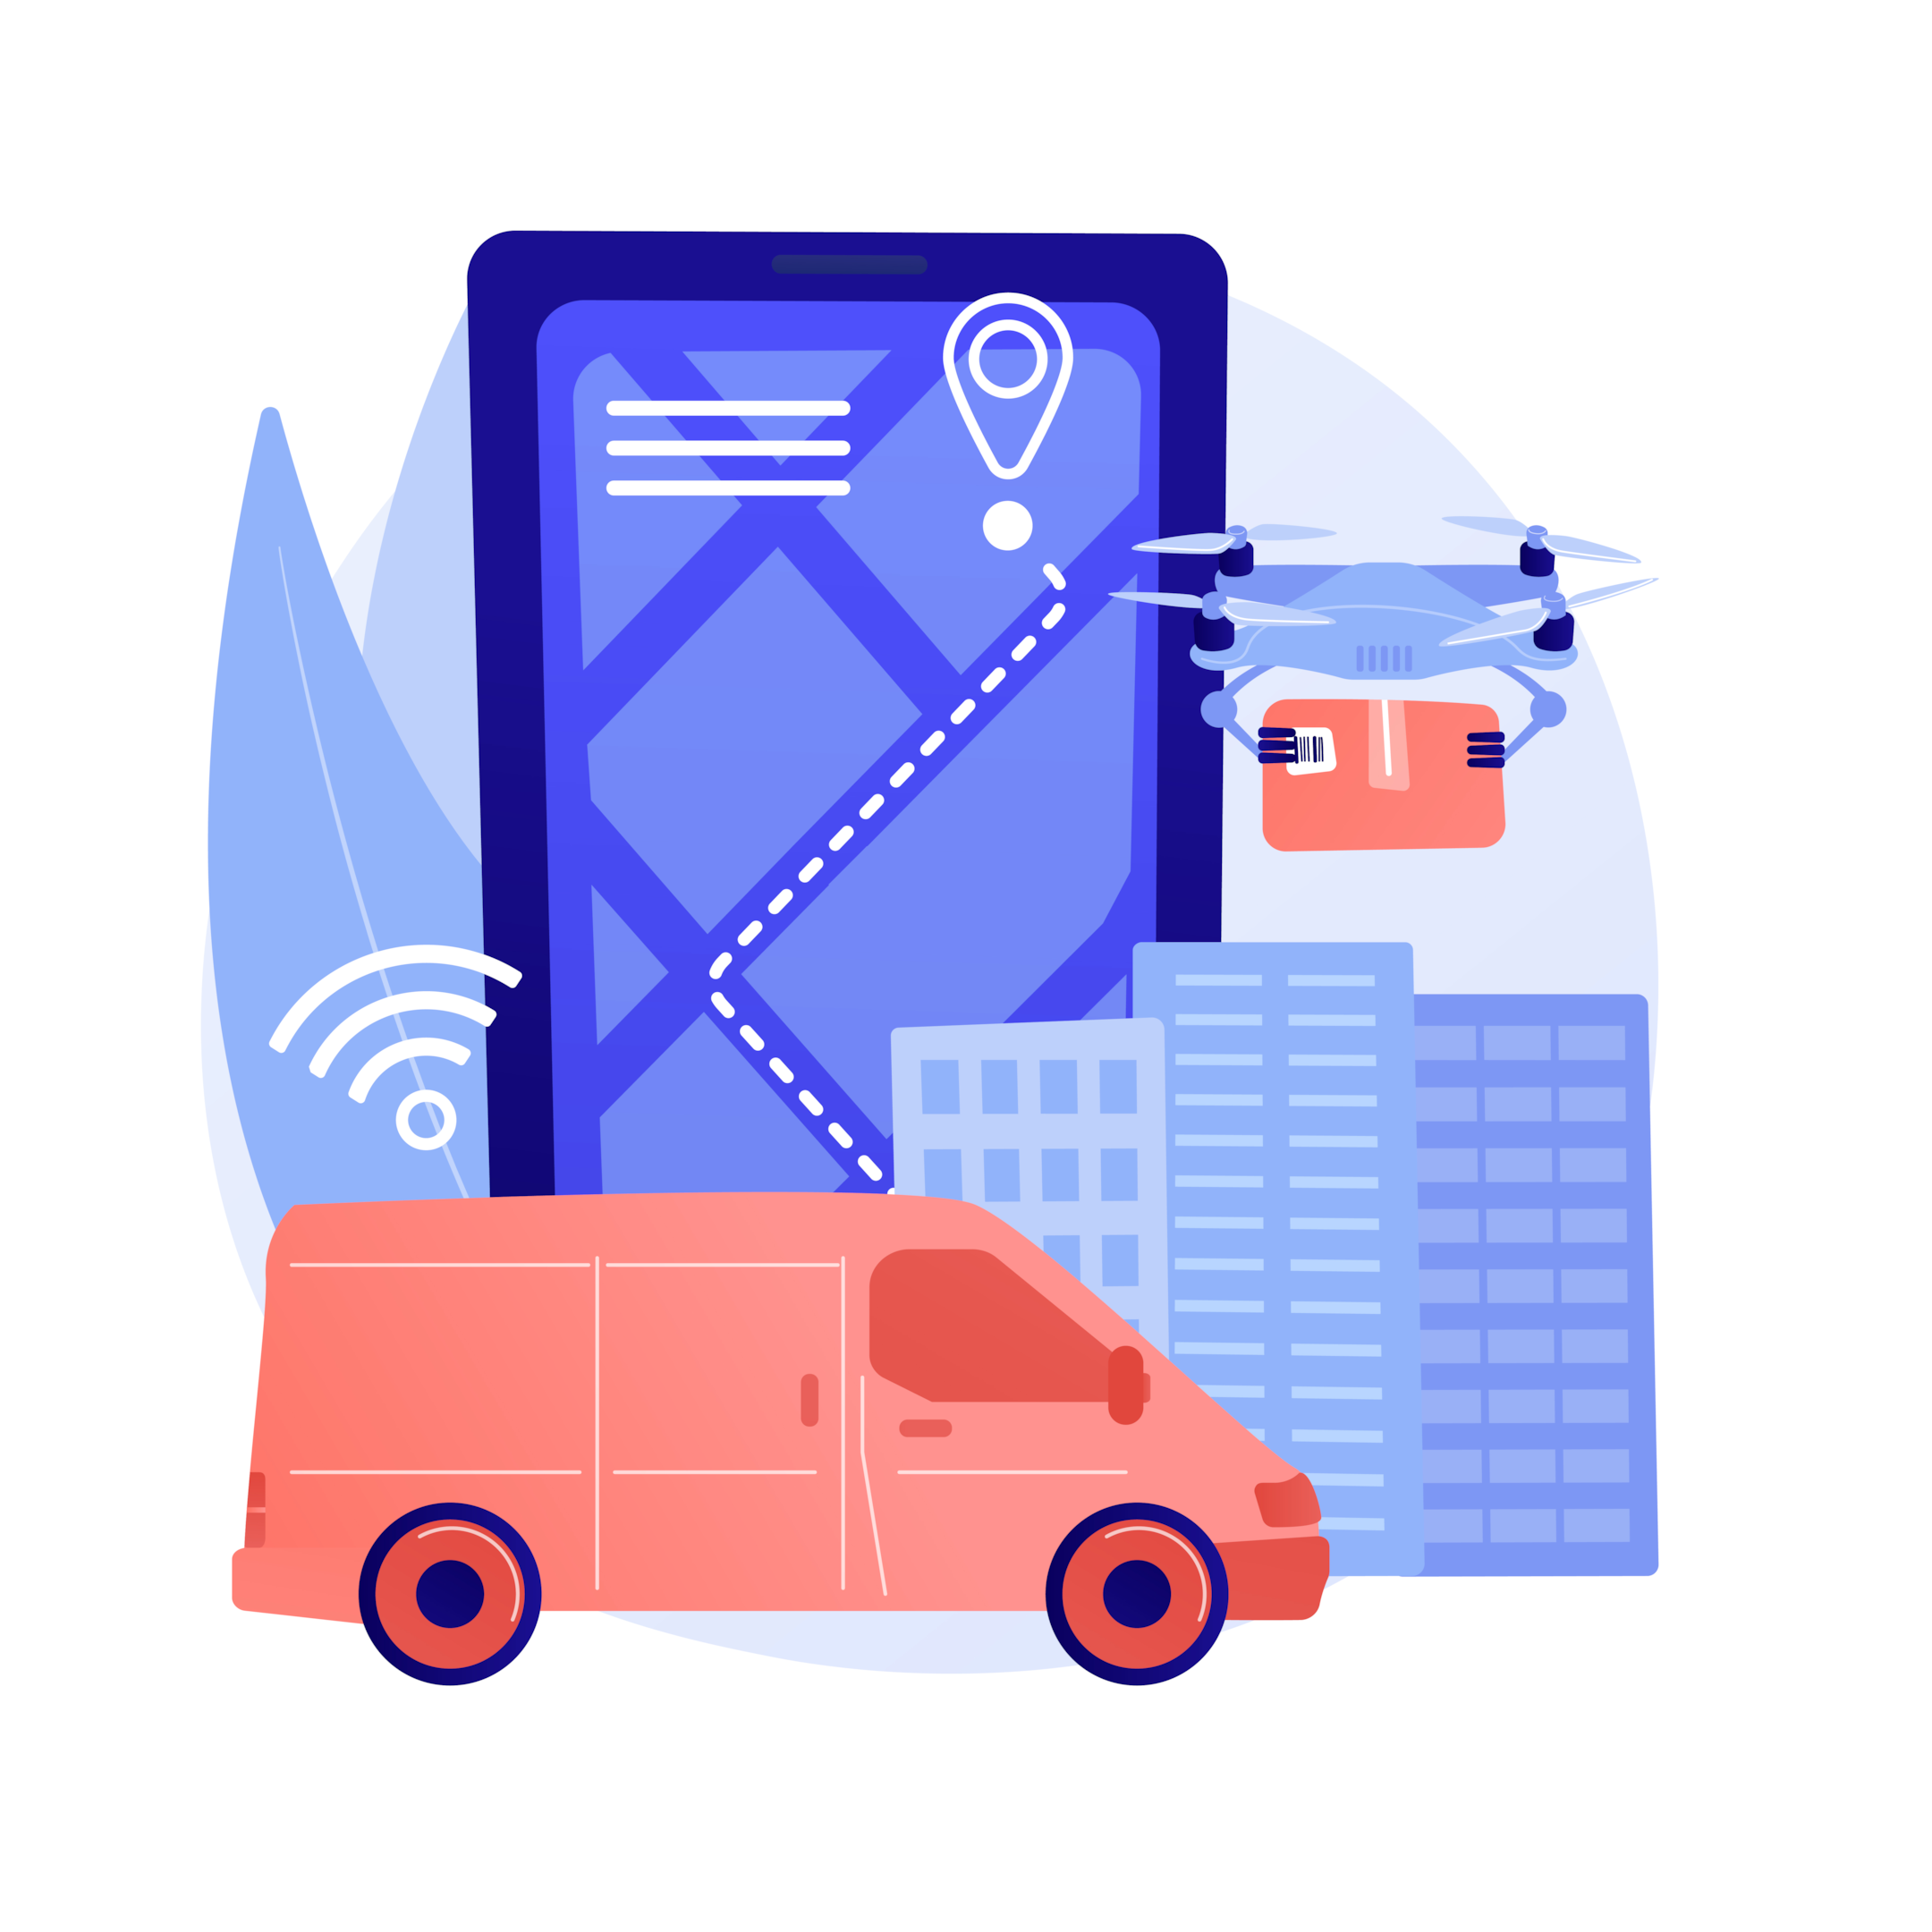 Autonomous delivery abstract concept